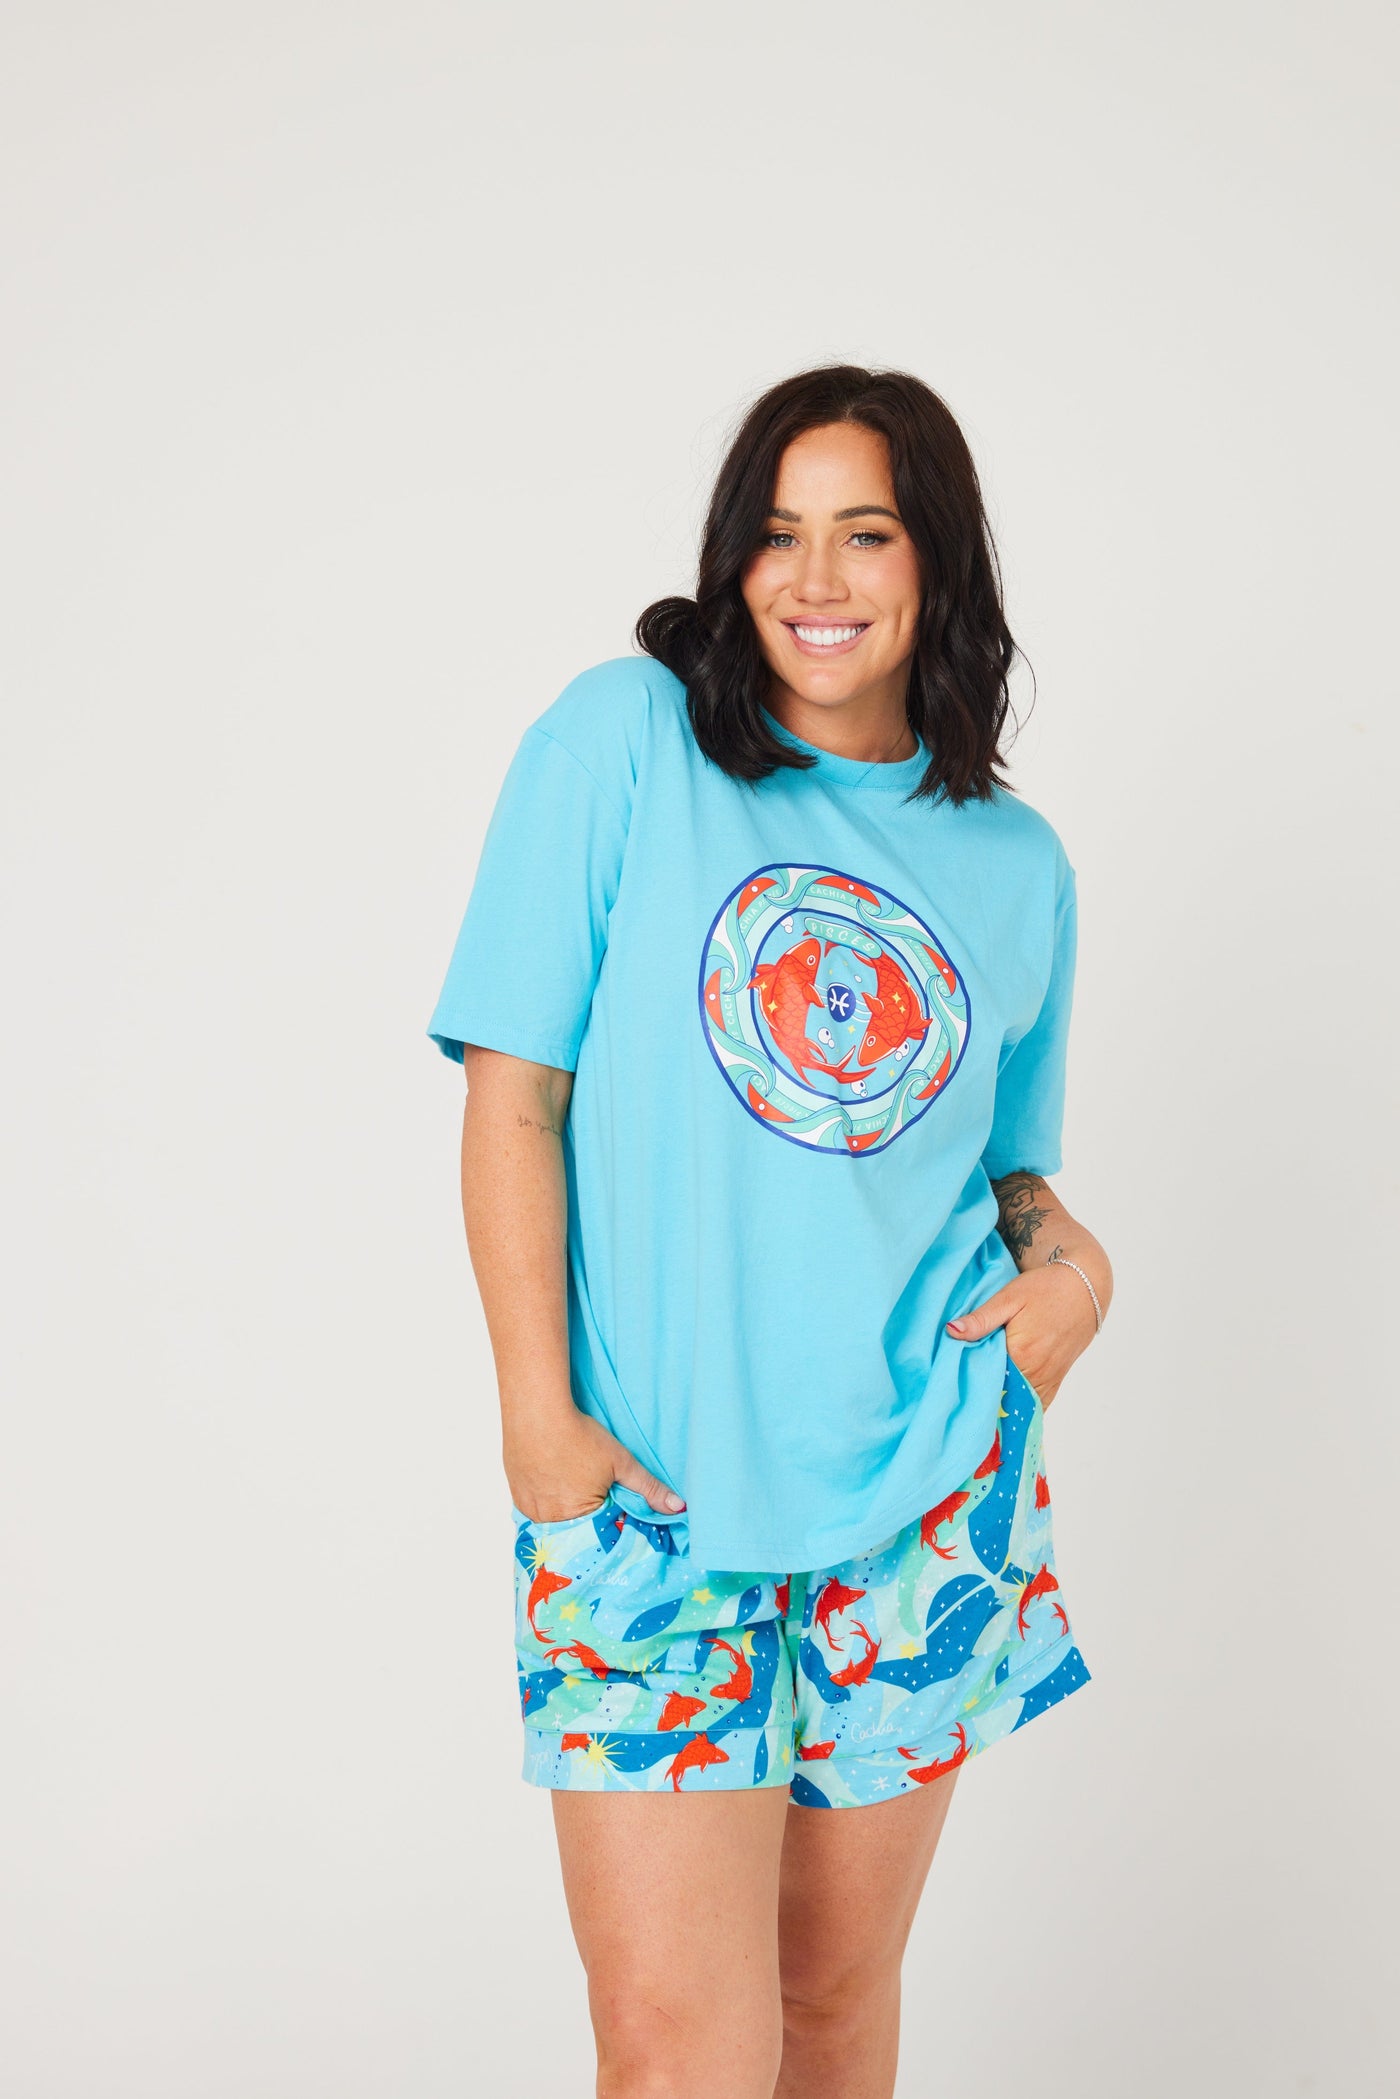 Cachia Pisces - Zodiac Pyjama Bundle Pajamas